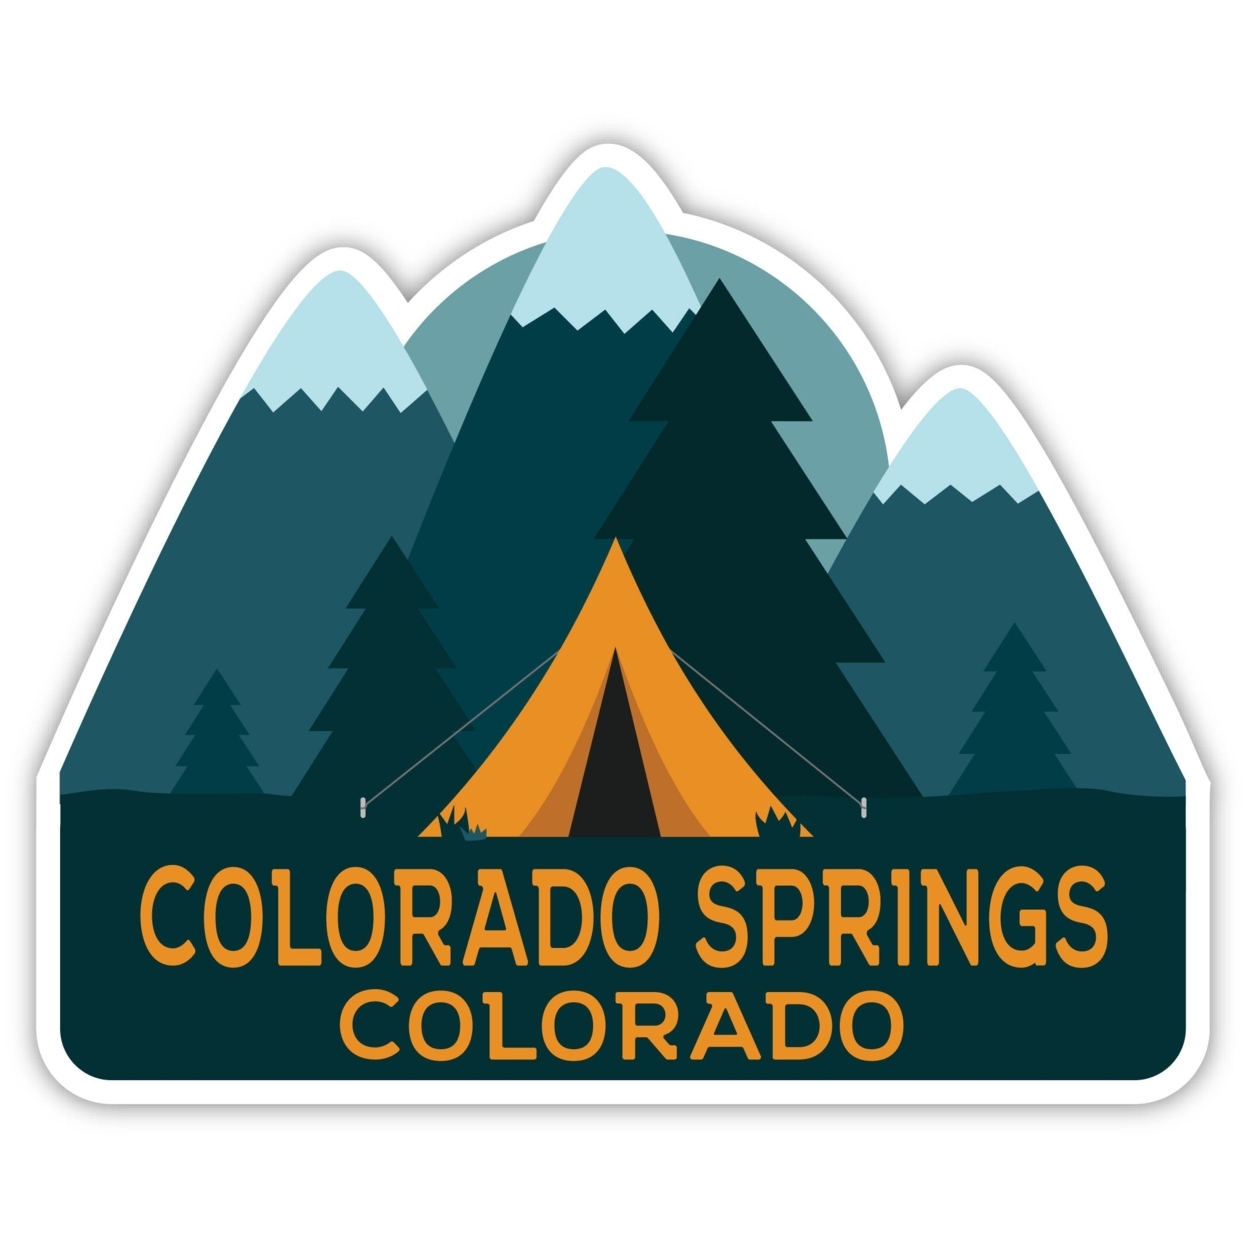 Colorado Springs Colorado Souvenir Decorative Stickers (Choose Theme And Size) - Single Unit, 8-Inch, Tent